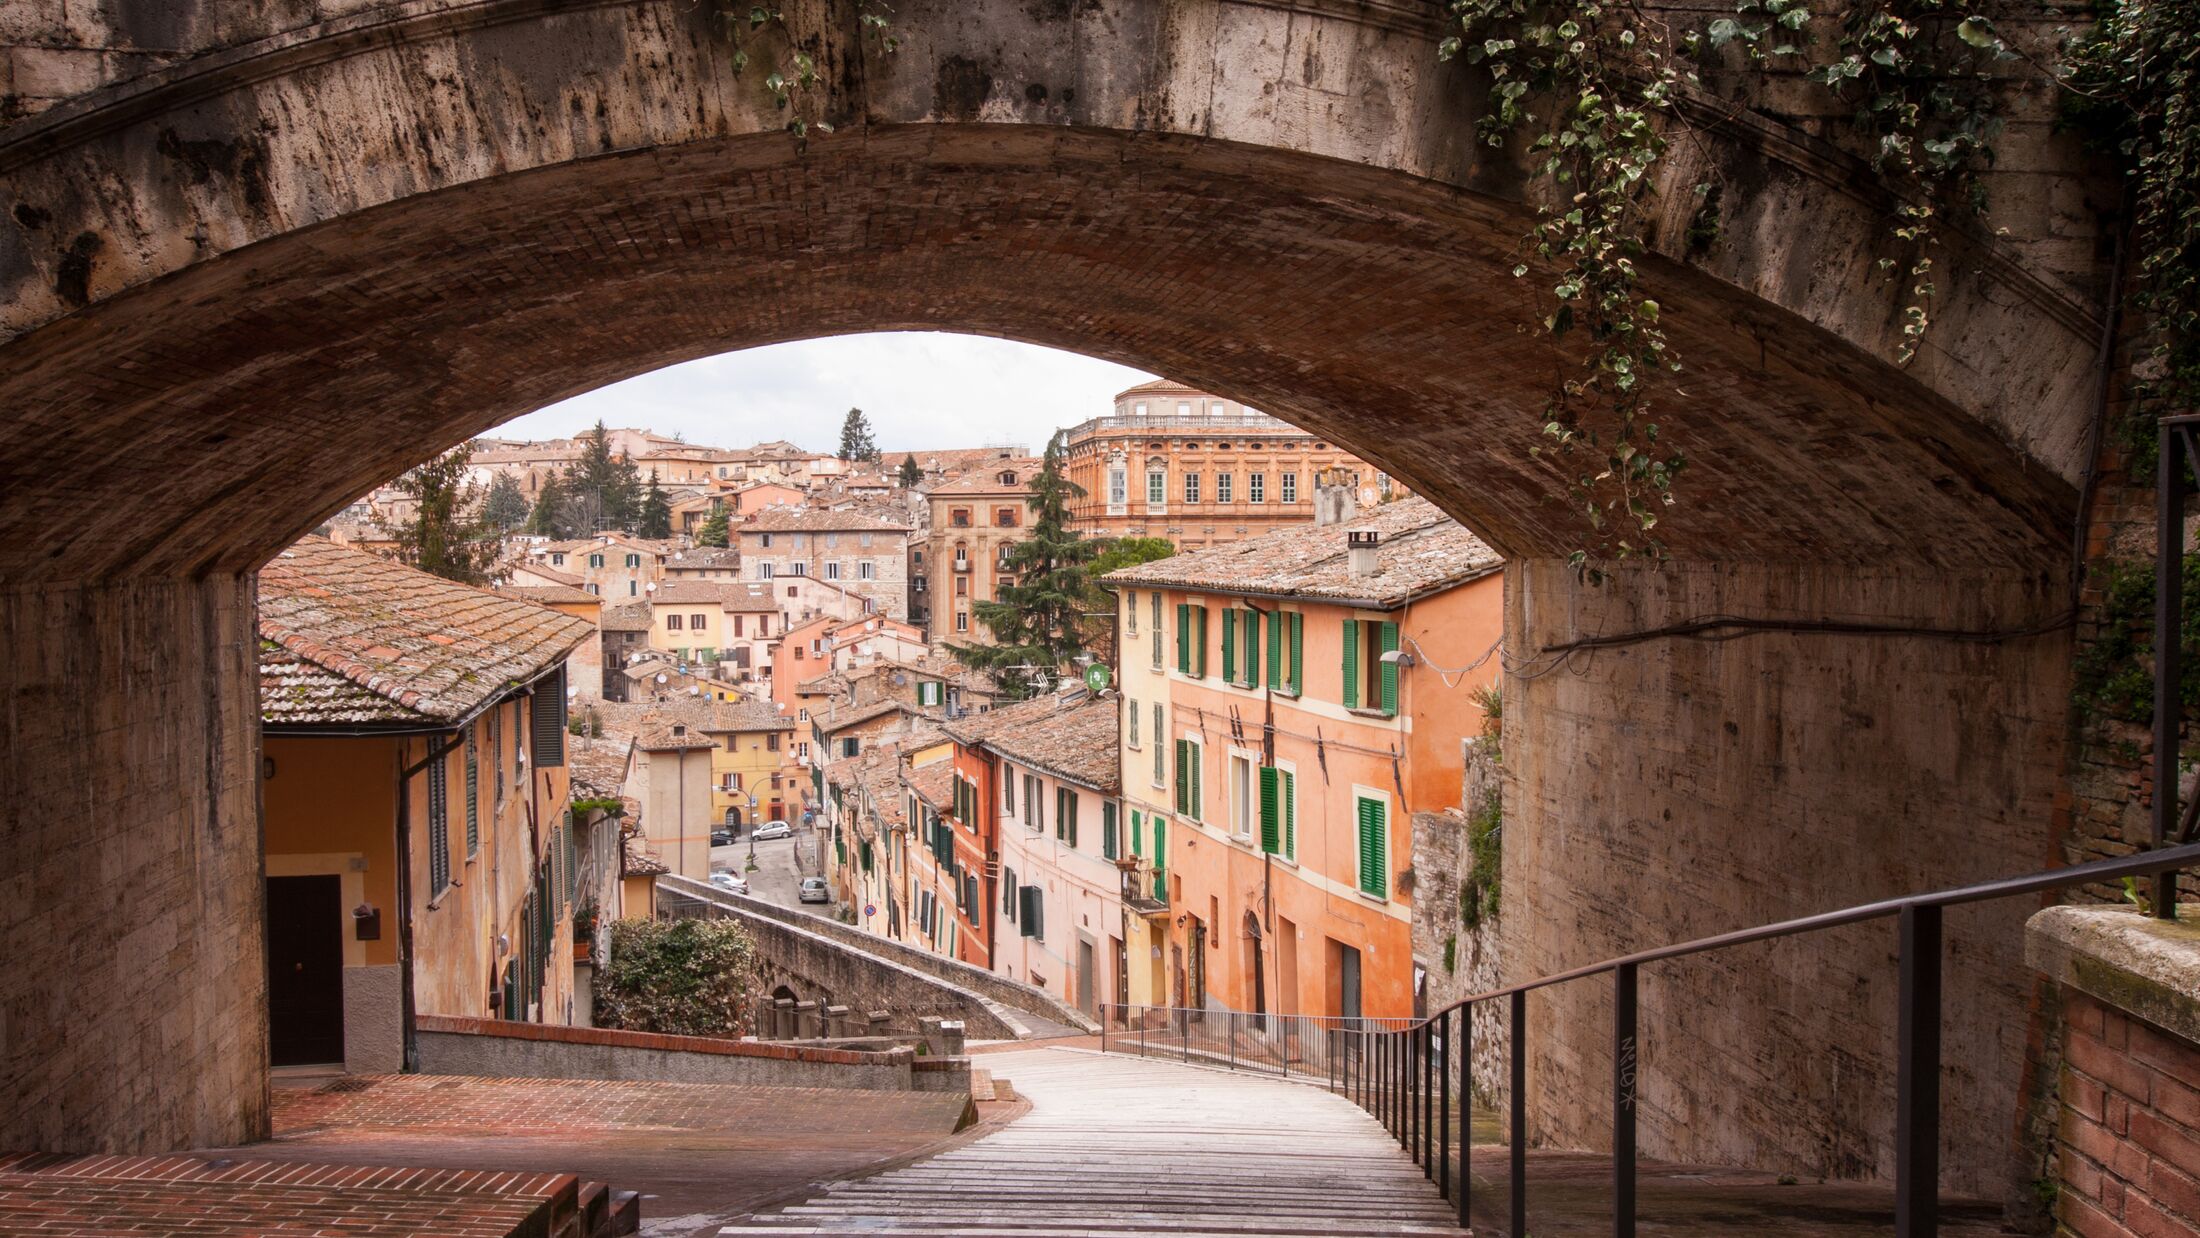 View of a 13th century acqueduct in Perugia, Umbria, Italy, Via Appia, Via Battisti.